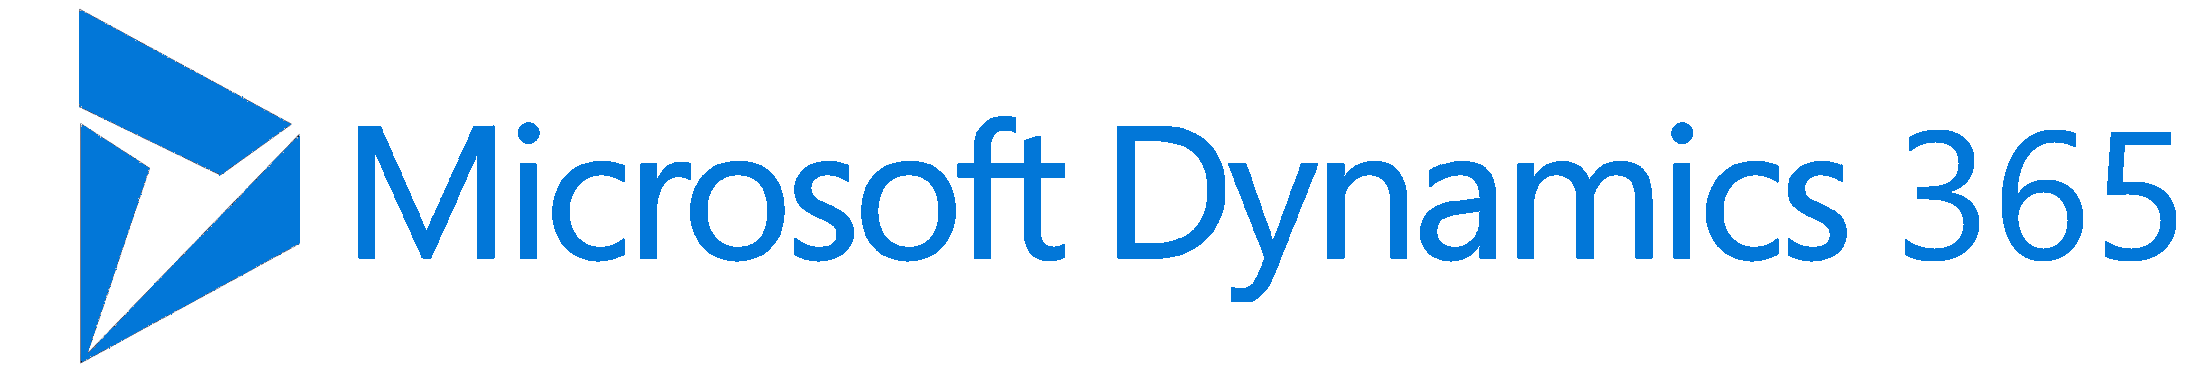 Dynamics CRM 365 Logo - Microsoft Dynamics 365 Larger Logo - ixRM | Microsoft Dynamics 365 ...